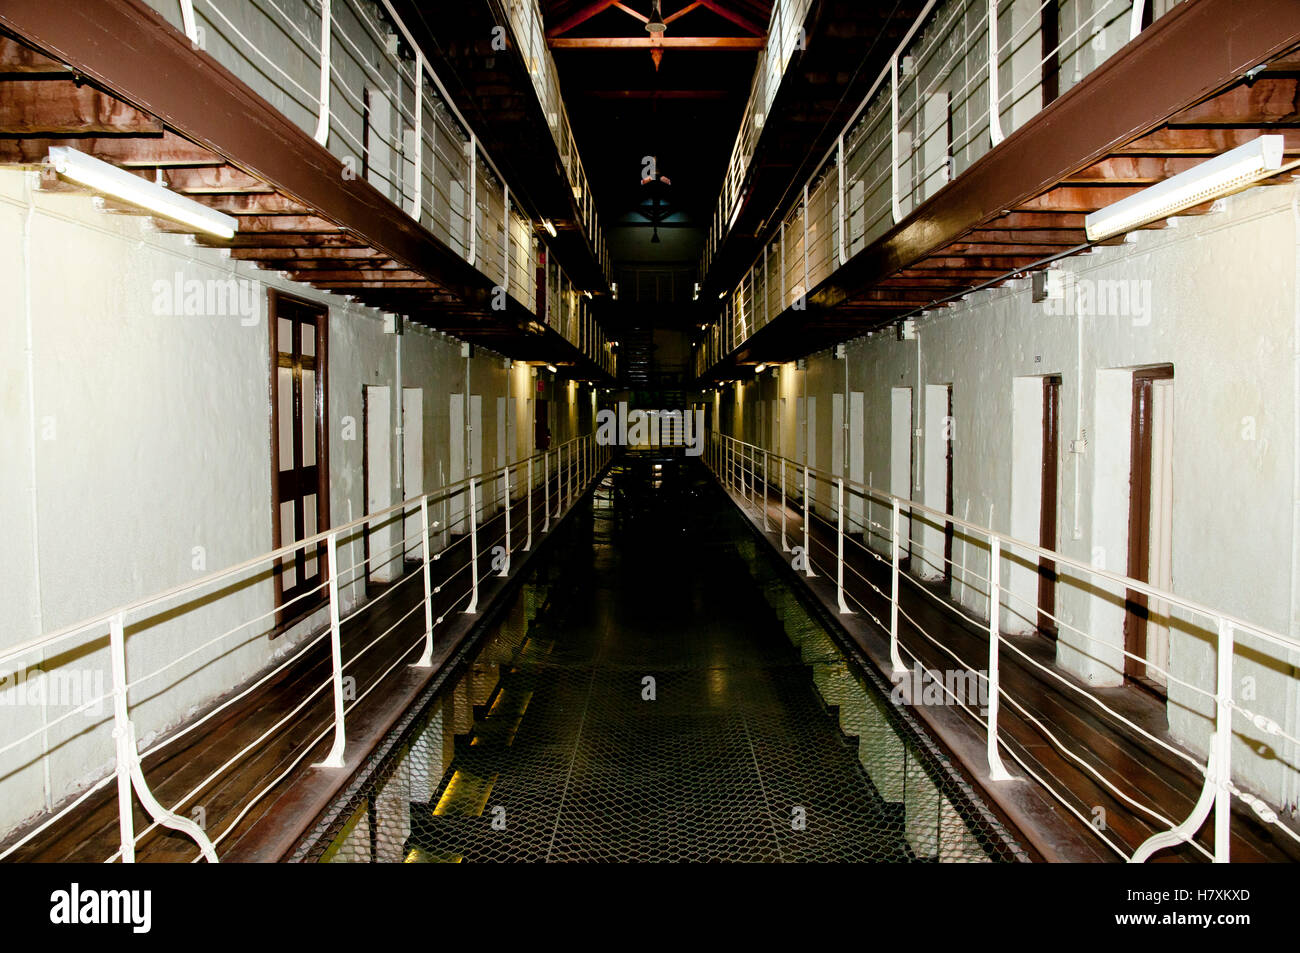 Fremantle Old Prison Corridor - Australia Stock Photo